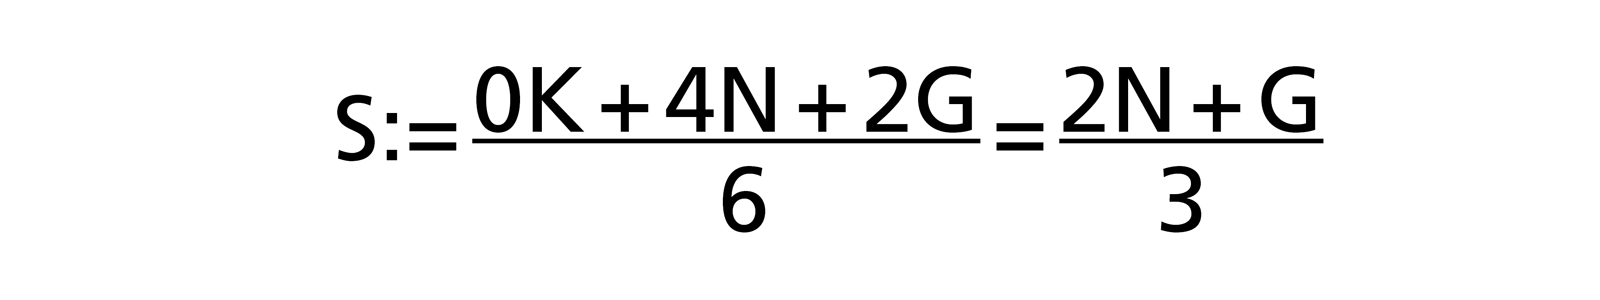 Estimation formula two-point estimation: S:= (0K + 4N + 2G) / 6 = (2N + G) / 3